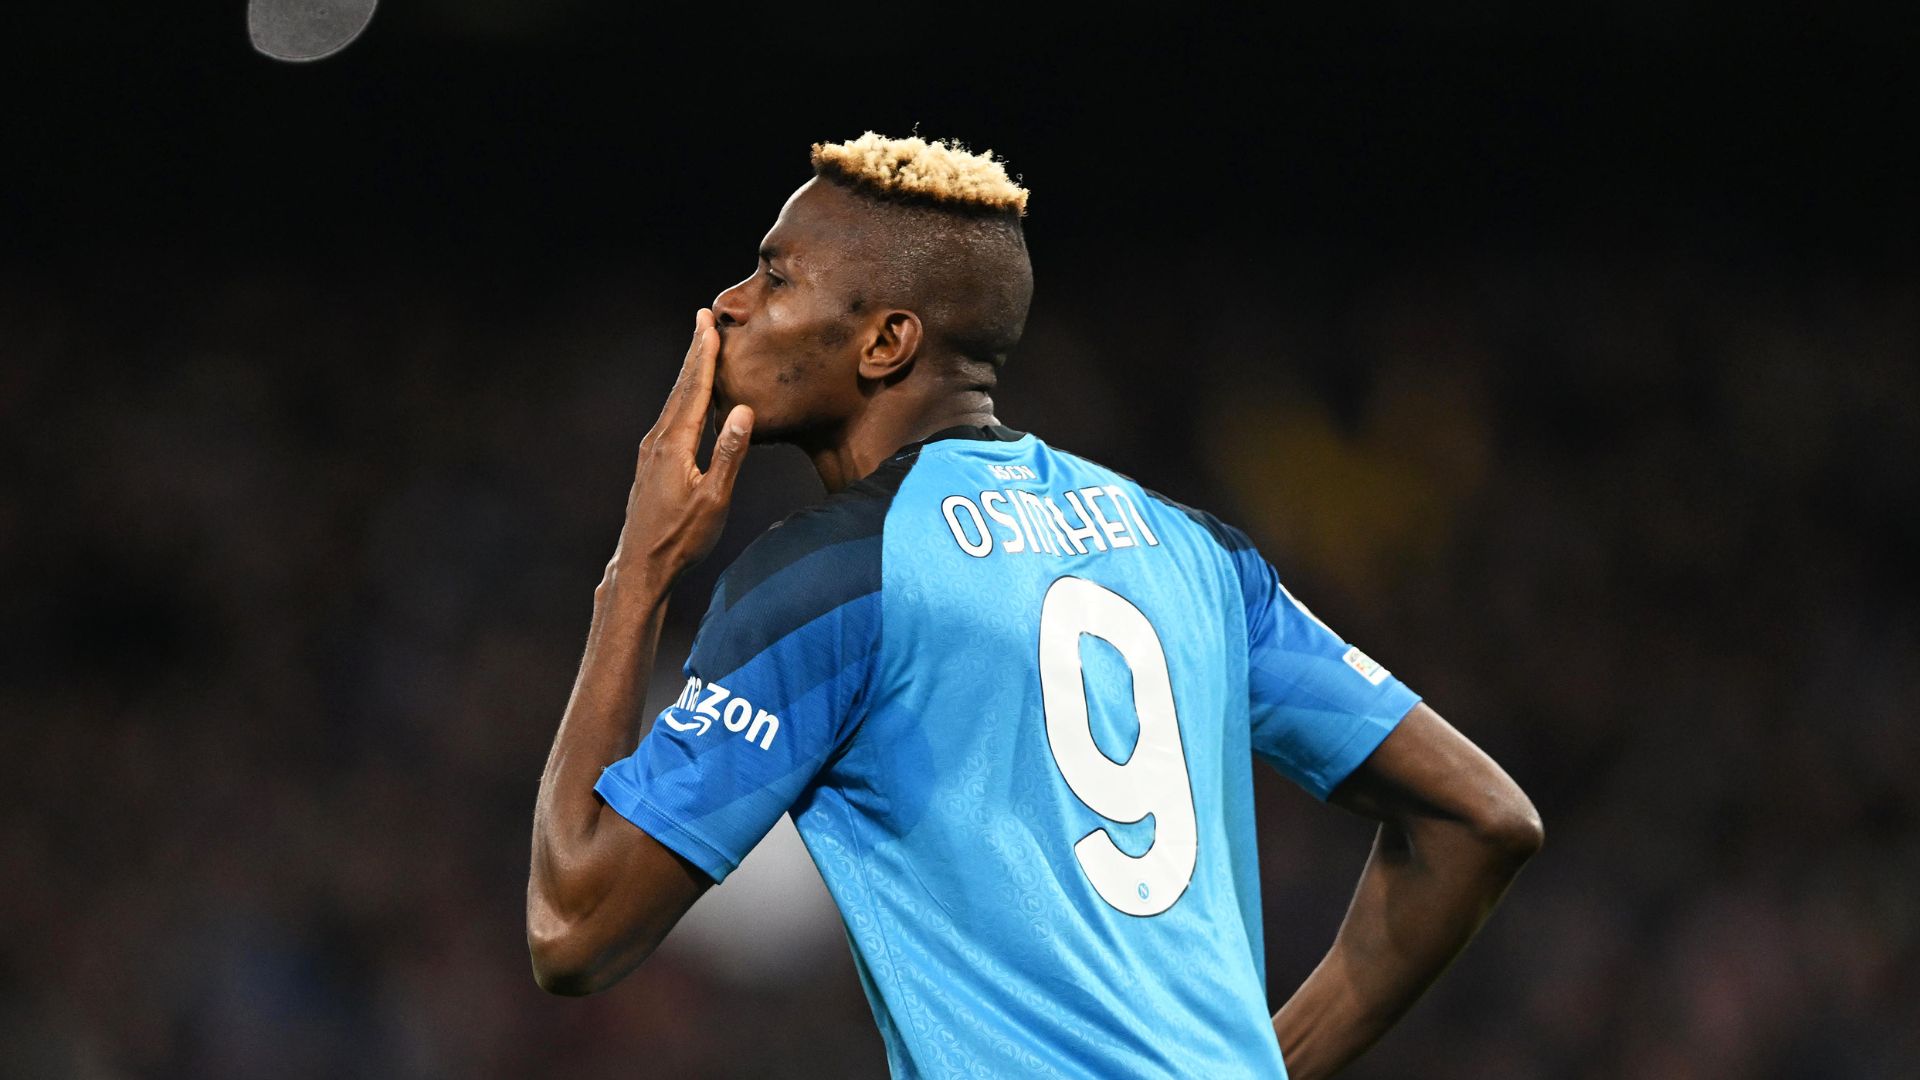 Osimhen comemorando gol pelo Napoli (Crédito: Getty Images)